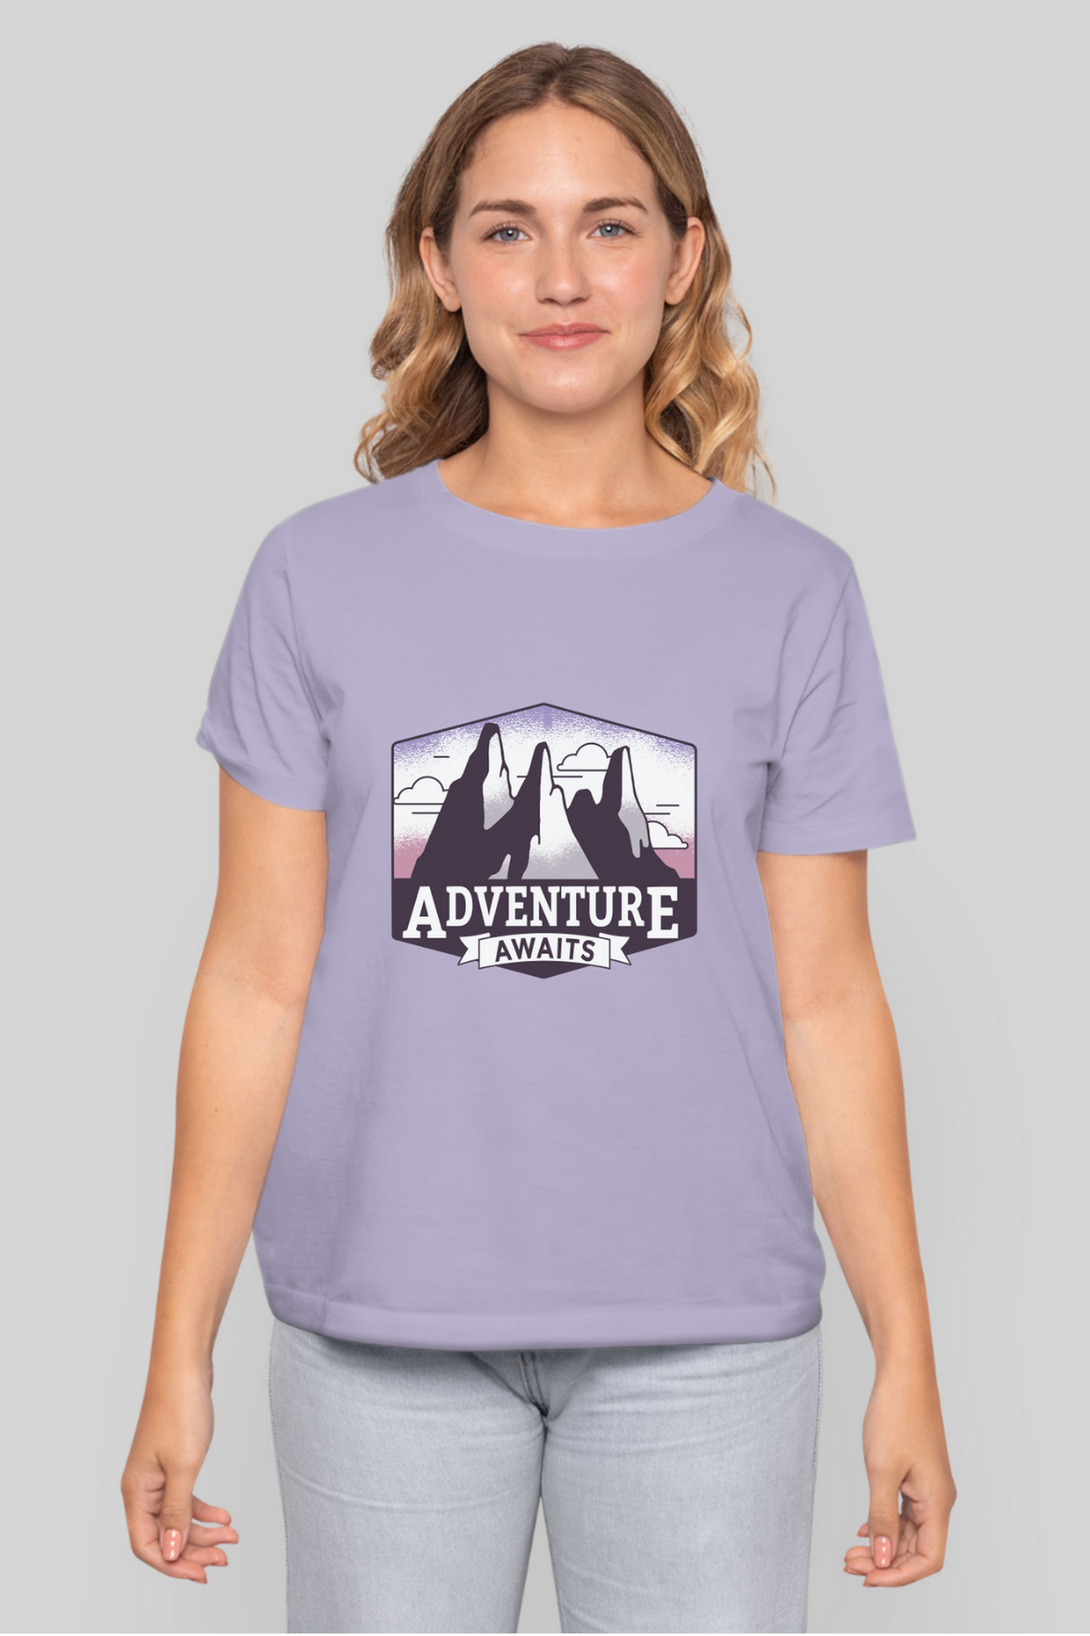 Adventure Awaits Printed T-Shirt For Women - WowWaves - 6